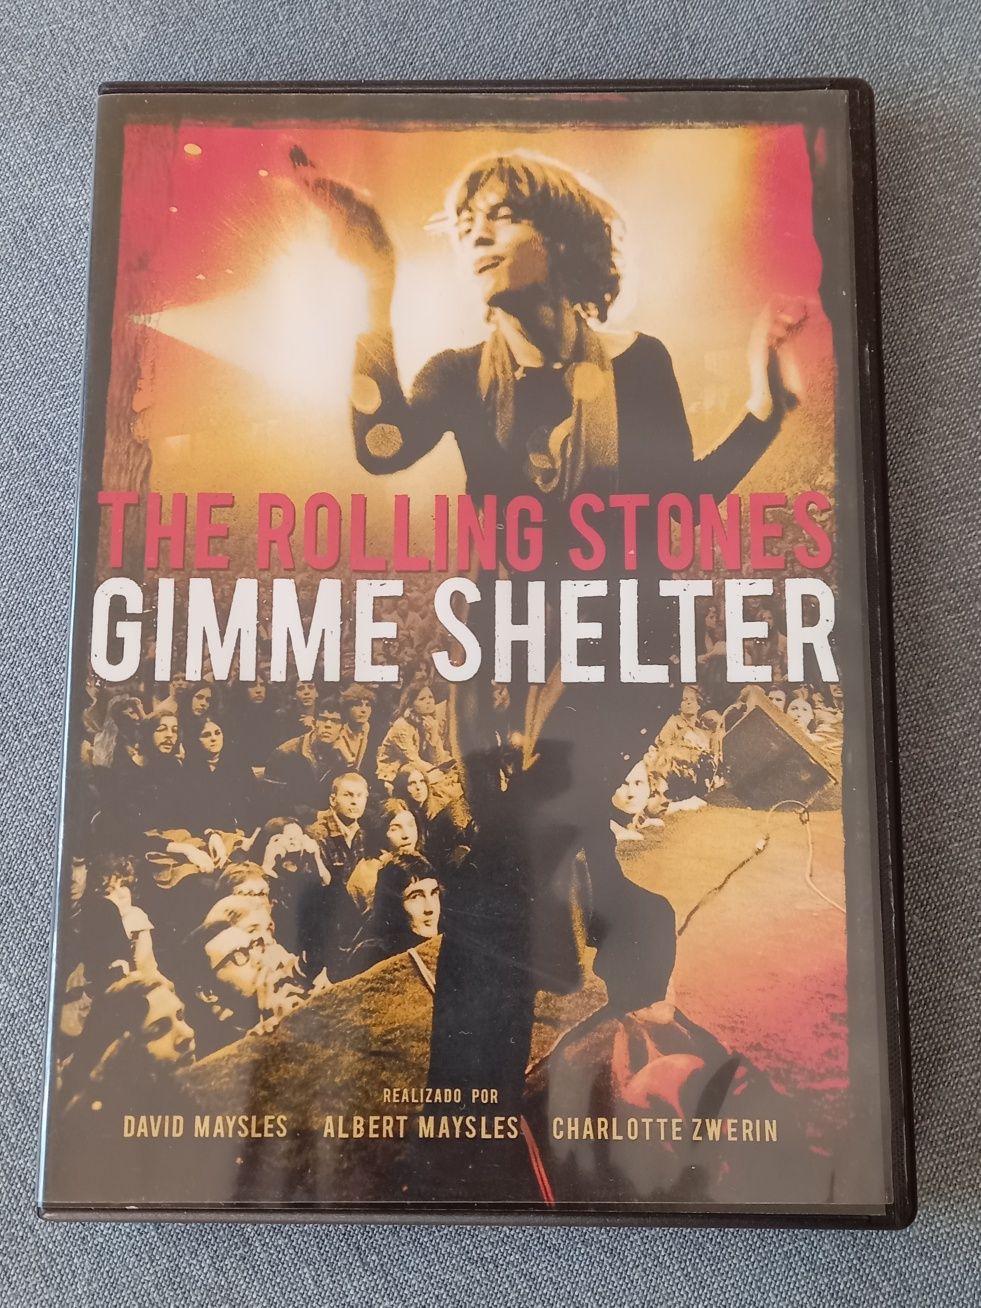 The Rolling Stones - Gimme Shelter - Altamont concert